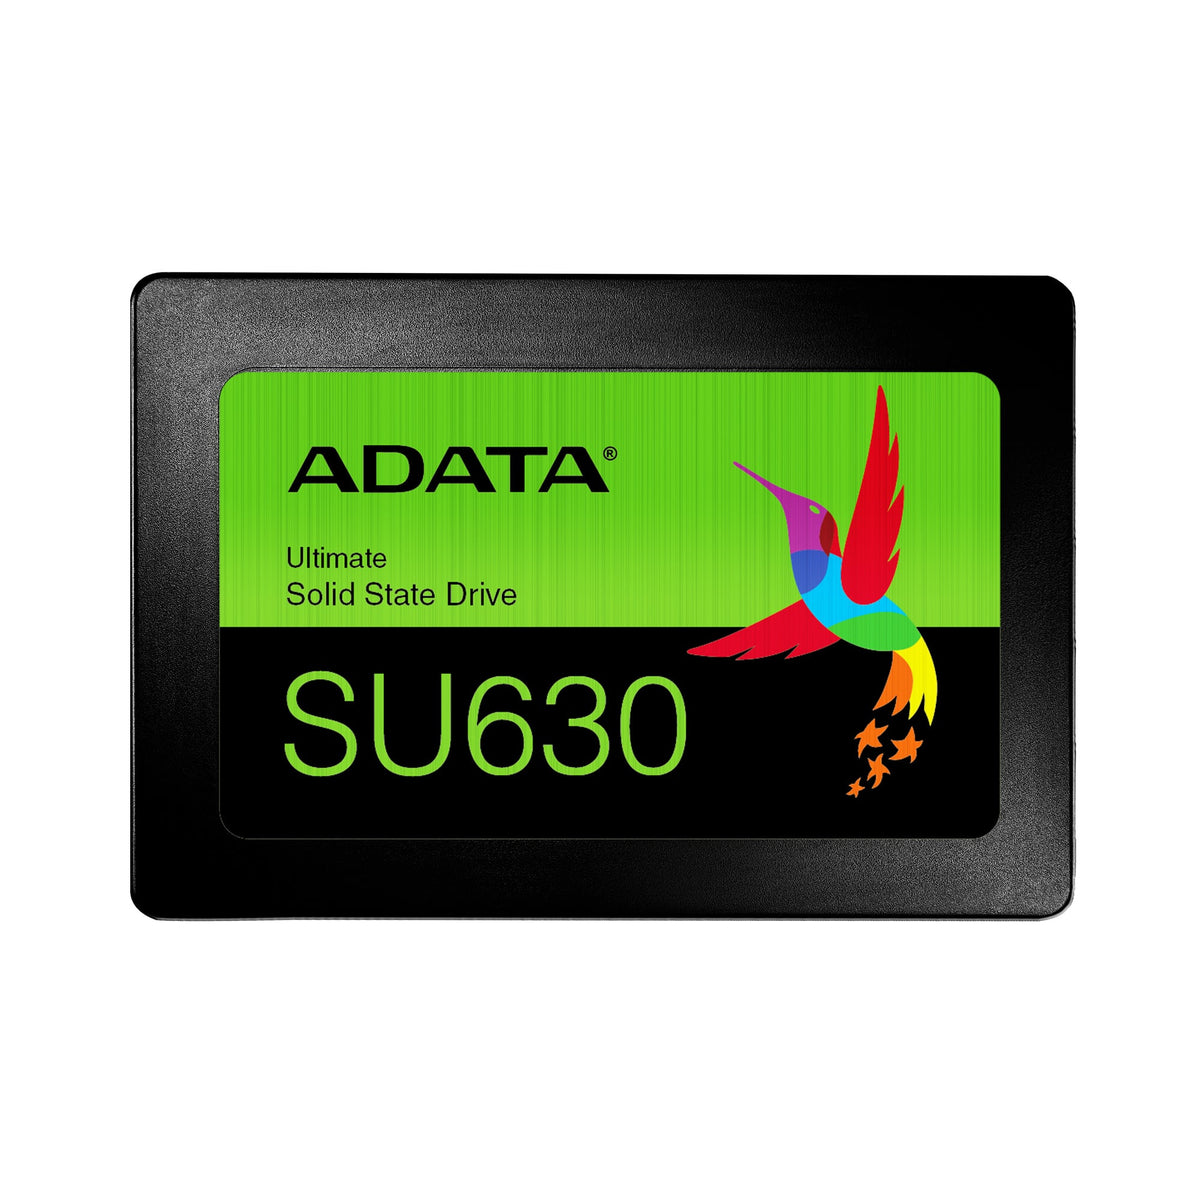 ADATA Internal SSD Ultimate SU630 2.5" 480 GB Serial ATA QLC 3D NAND